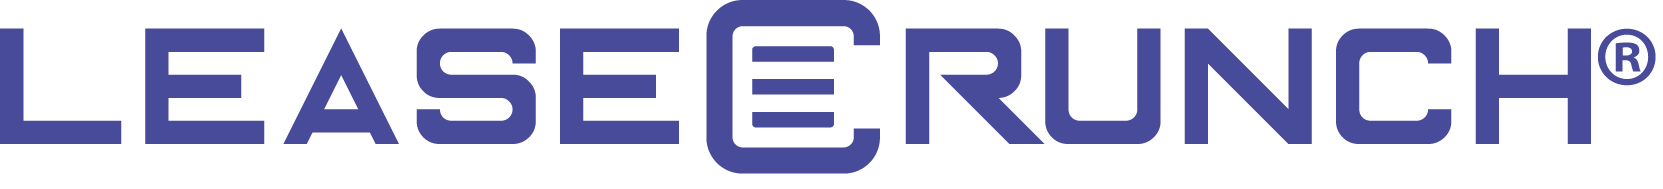 LeaseCrunch logo purple-registered (high res)